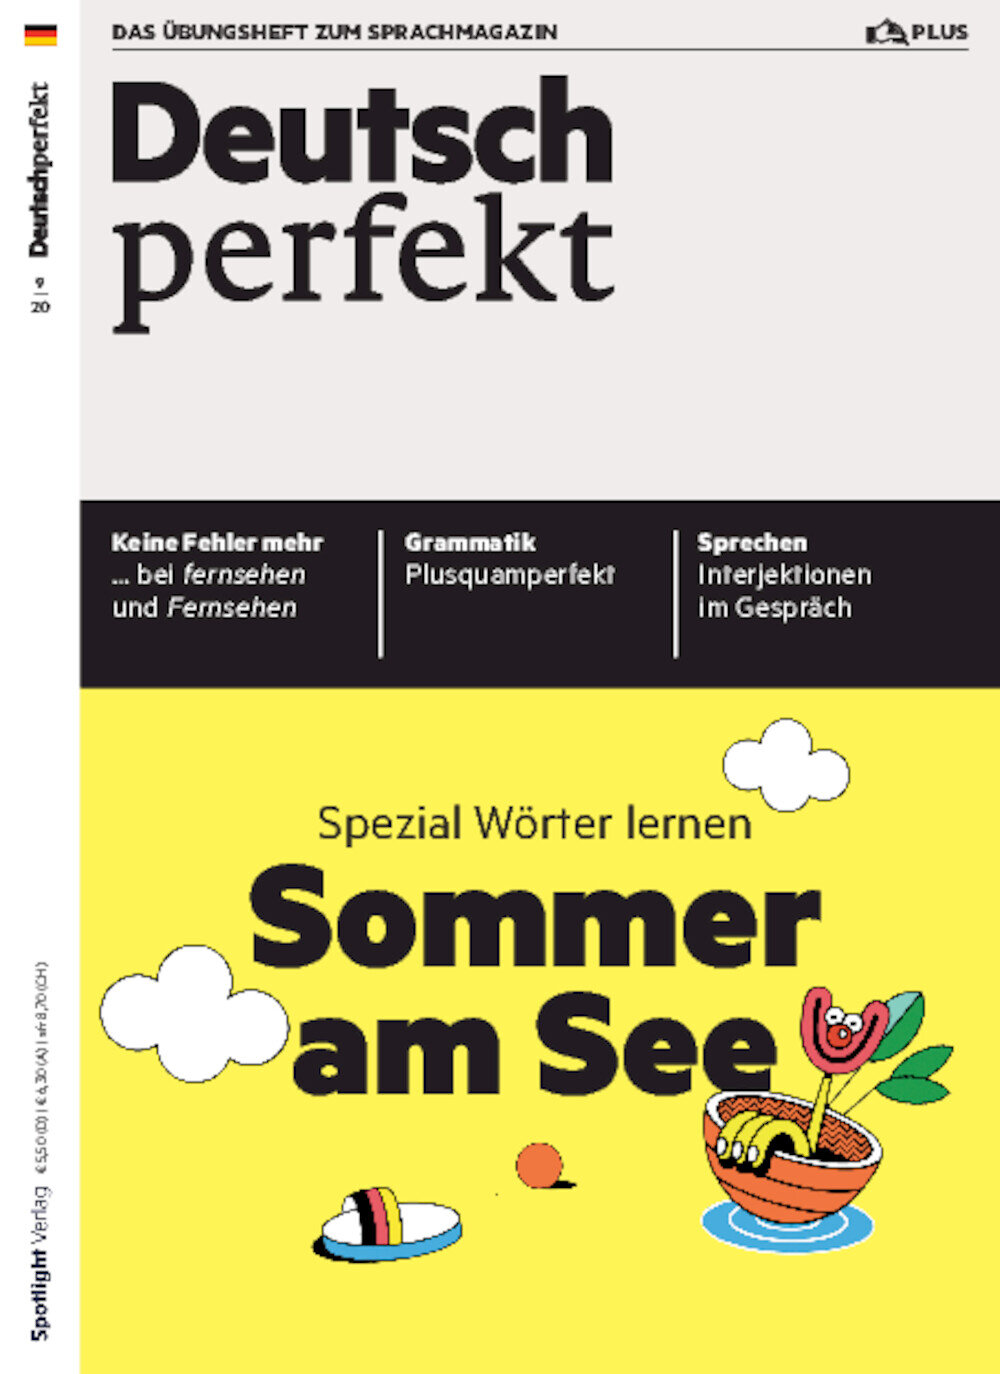 Deutsch perfekt PLUS ePaper 09/2020